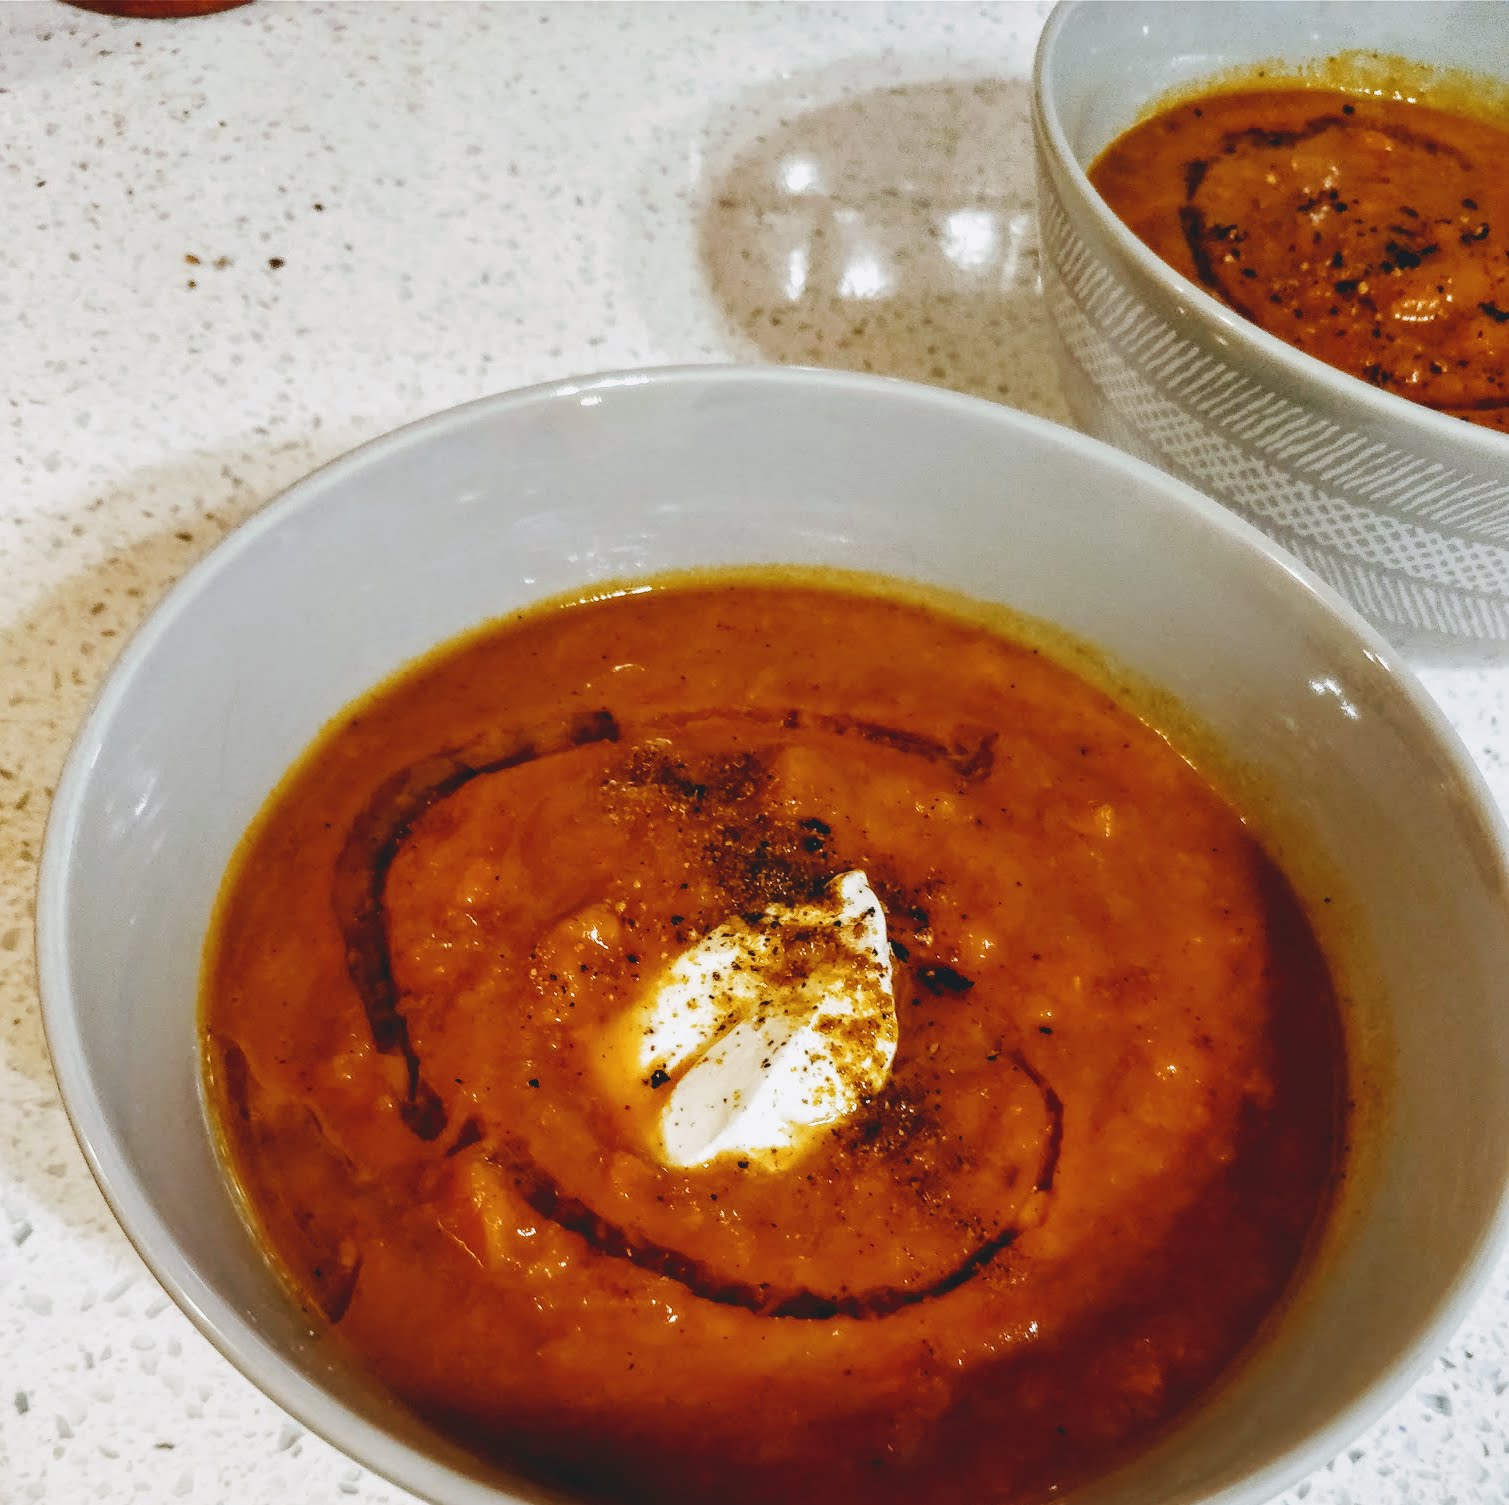 Mahhkk's Butternut Squash and Sweet Potato soup